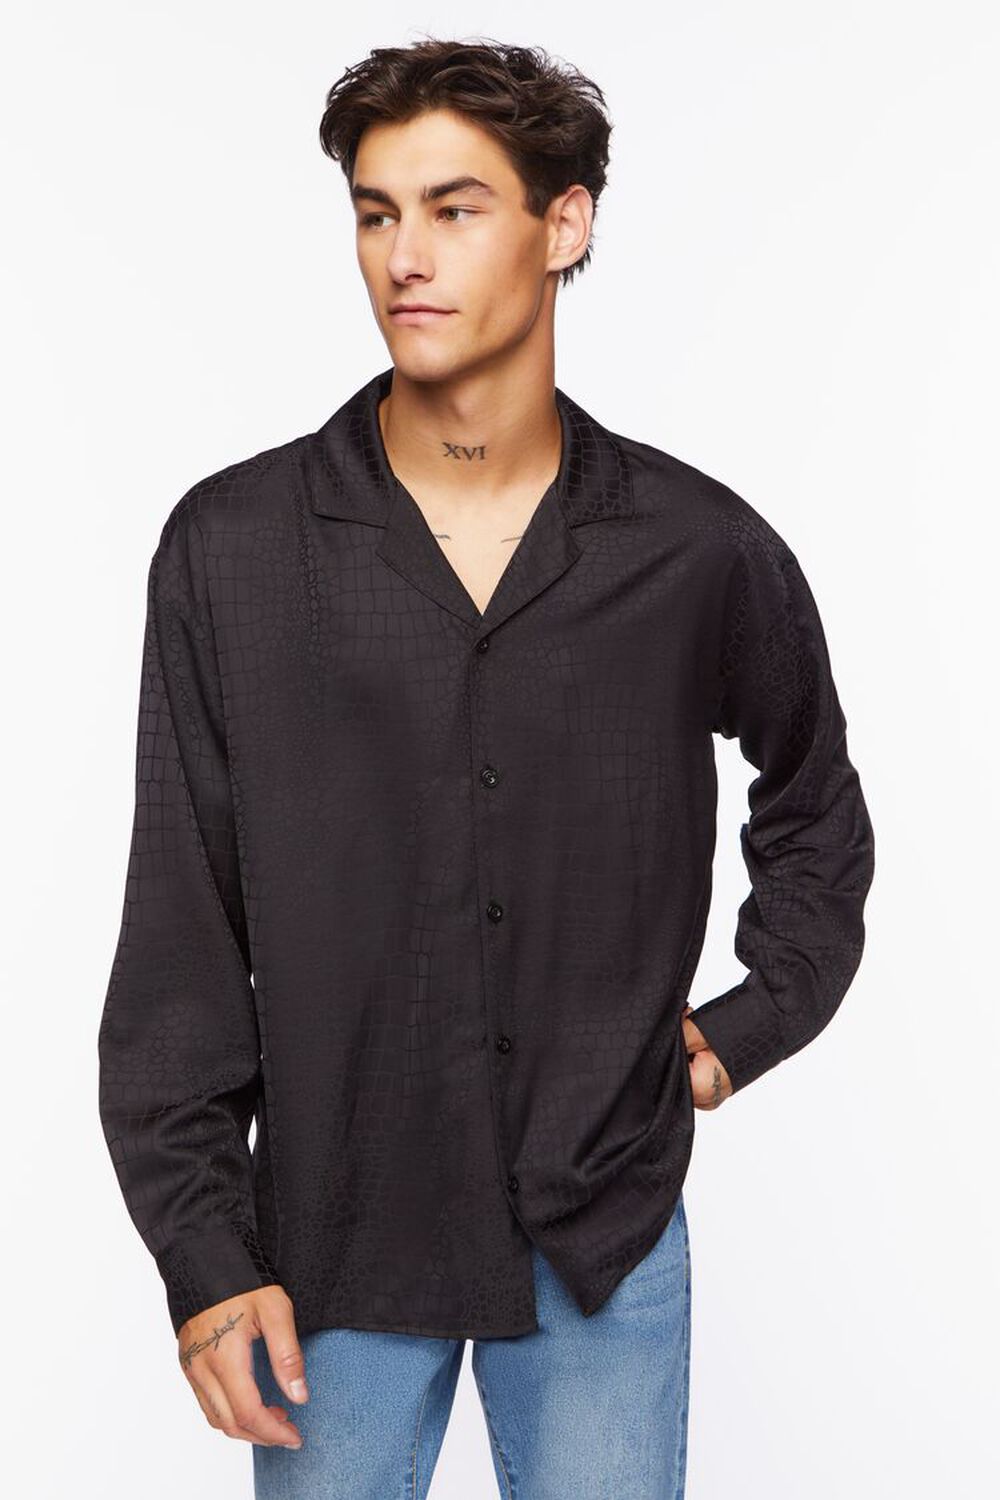 BLACK Croc Print Long-Sleeve Shirt, image 1